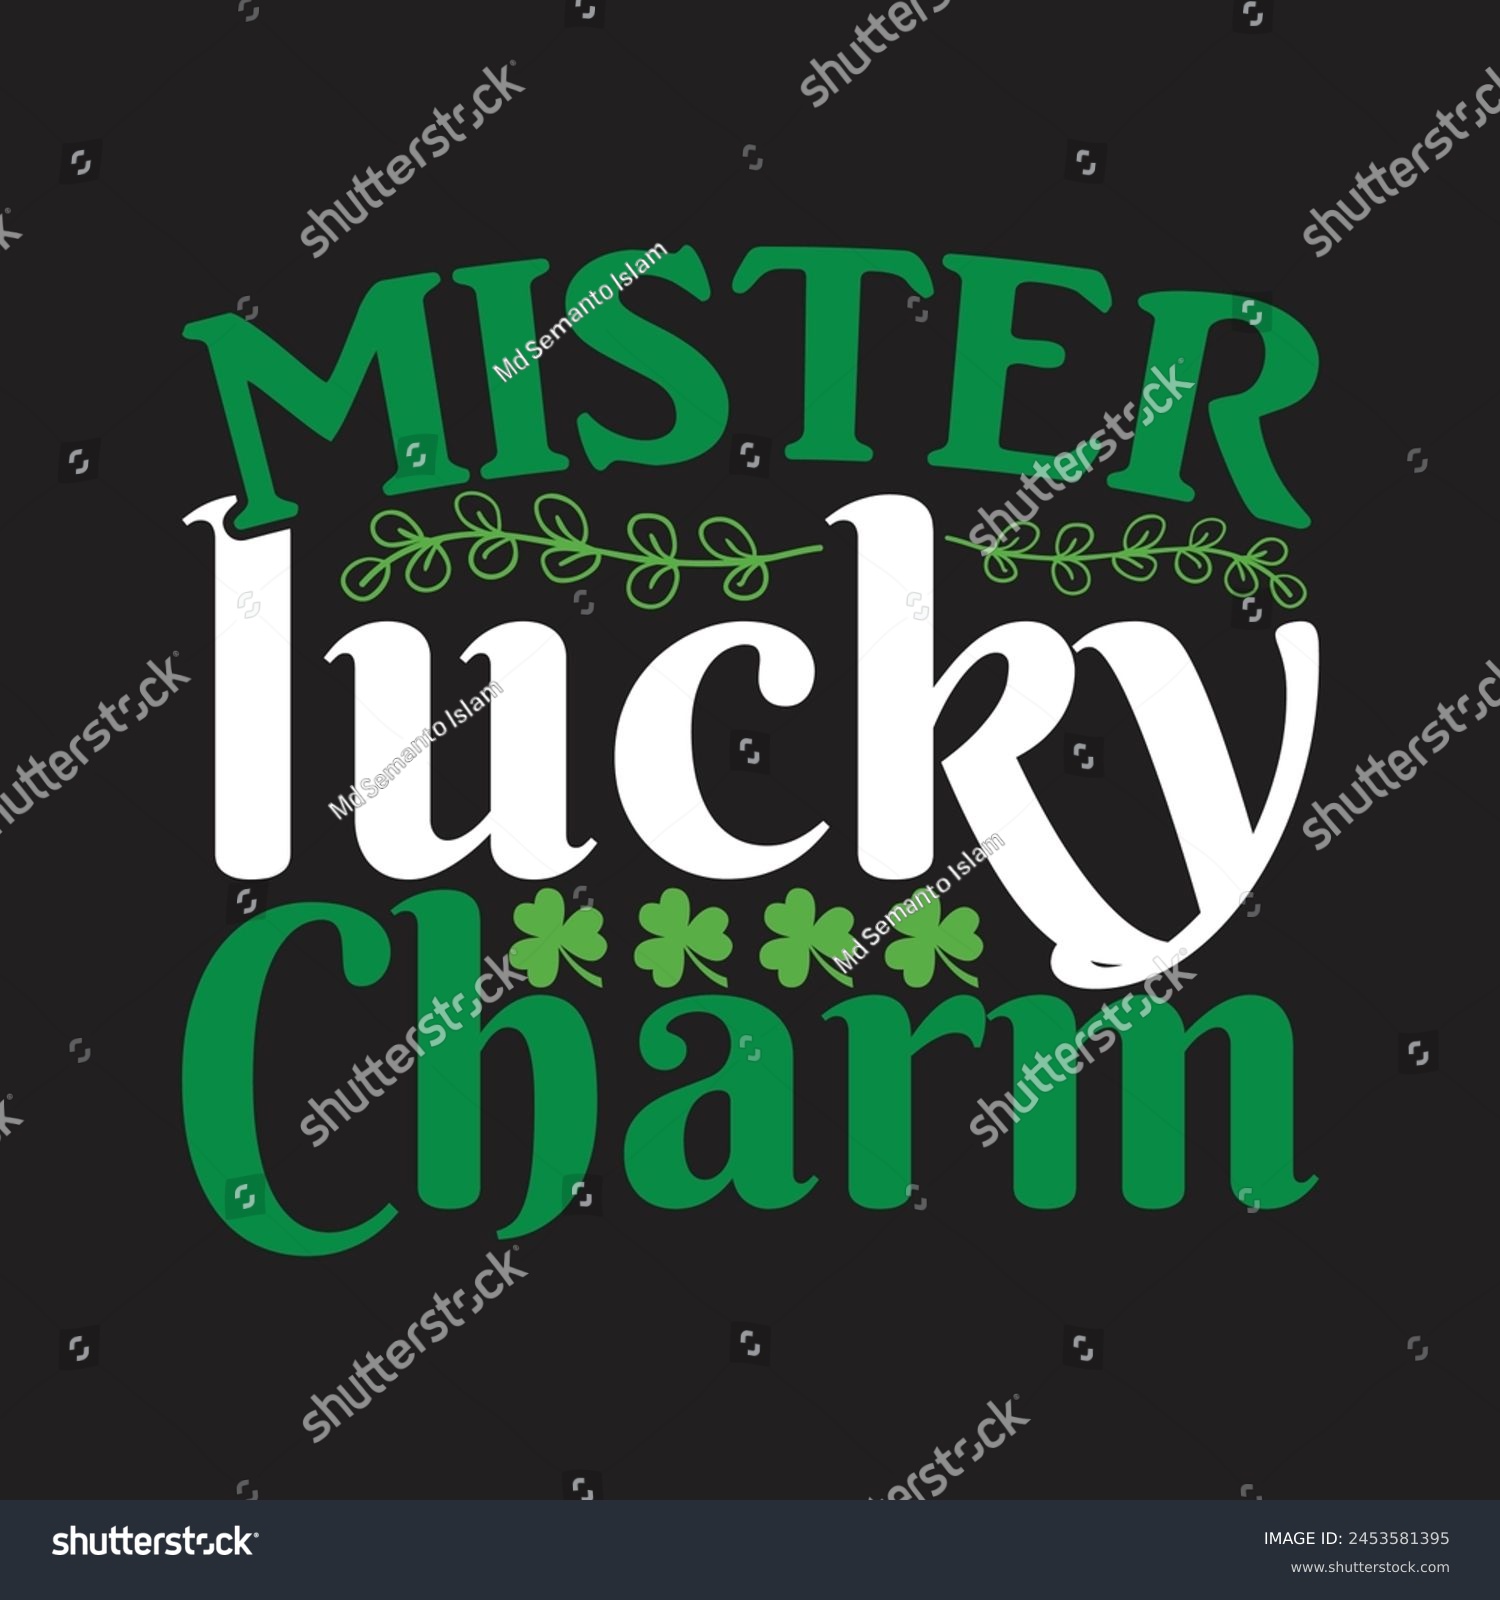 SVG of Mister lucky charm vector design svg